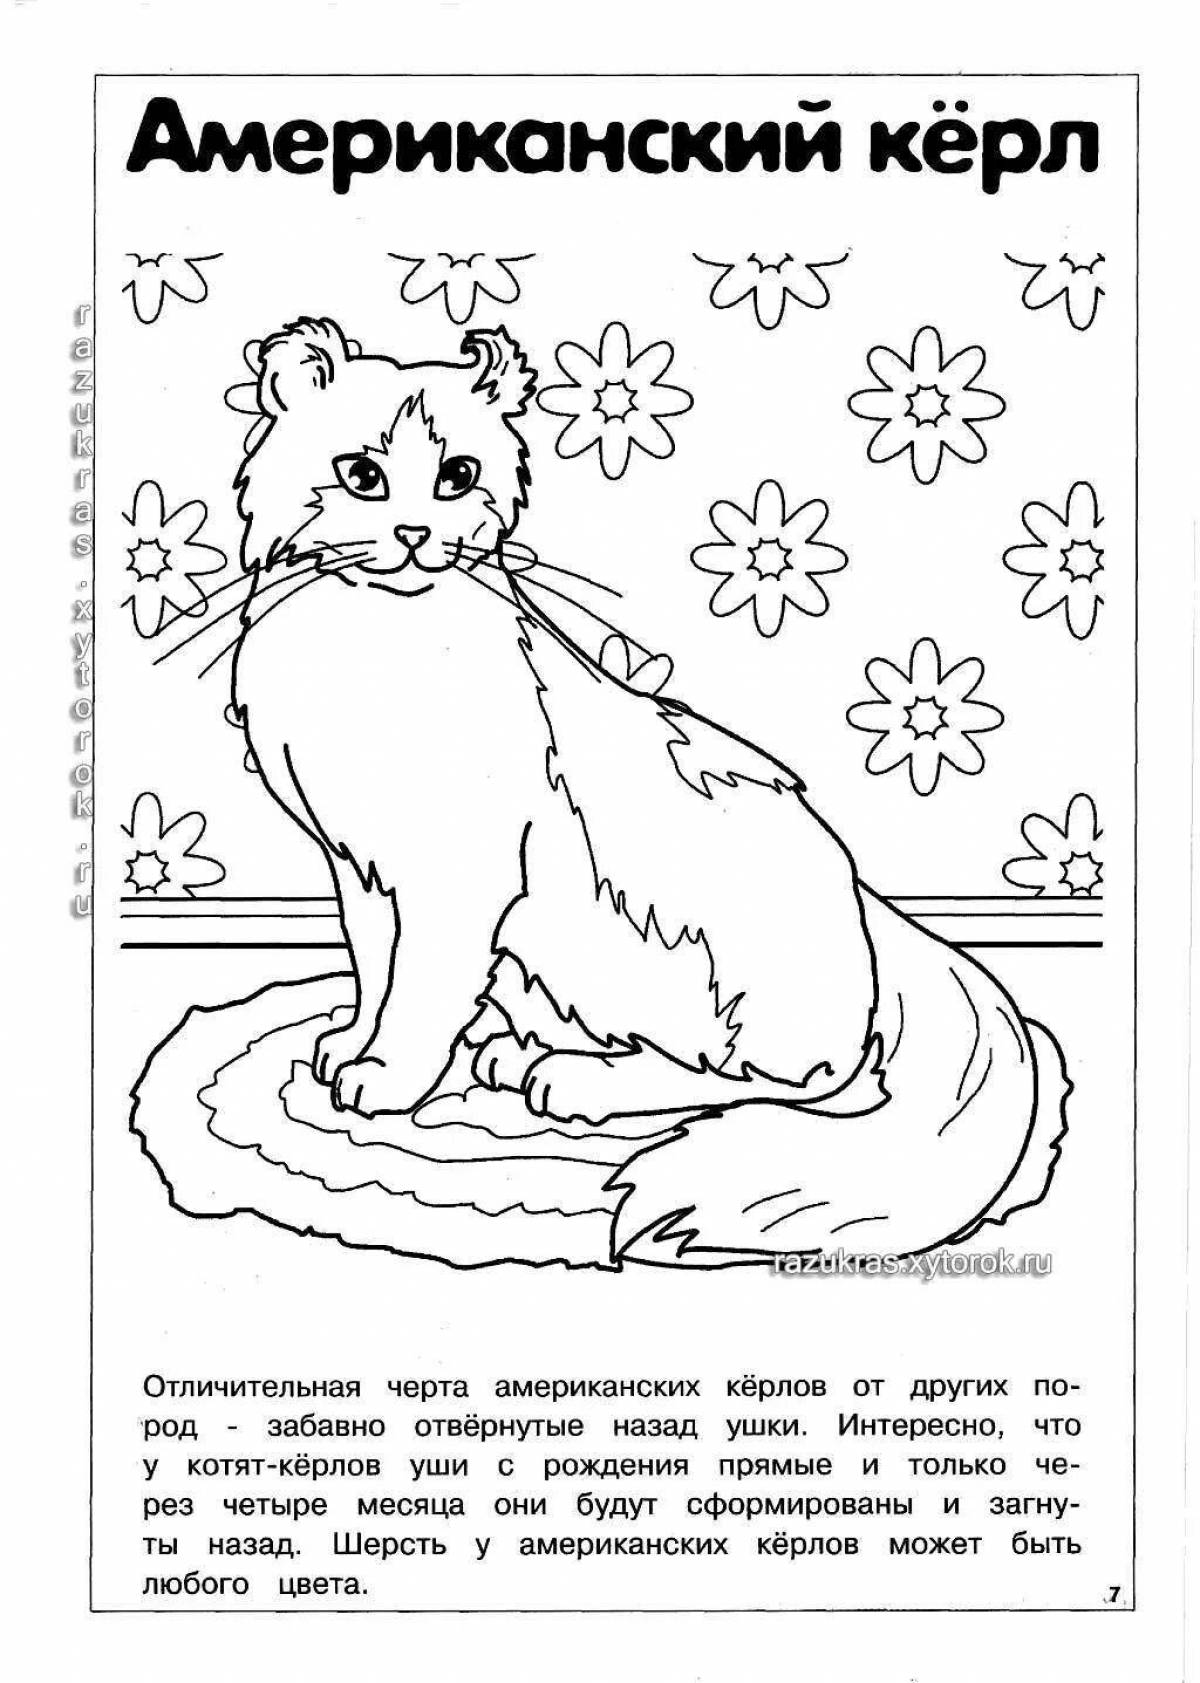 Elegant cat breed coloring book